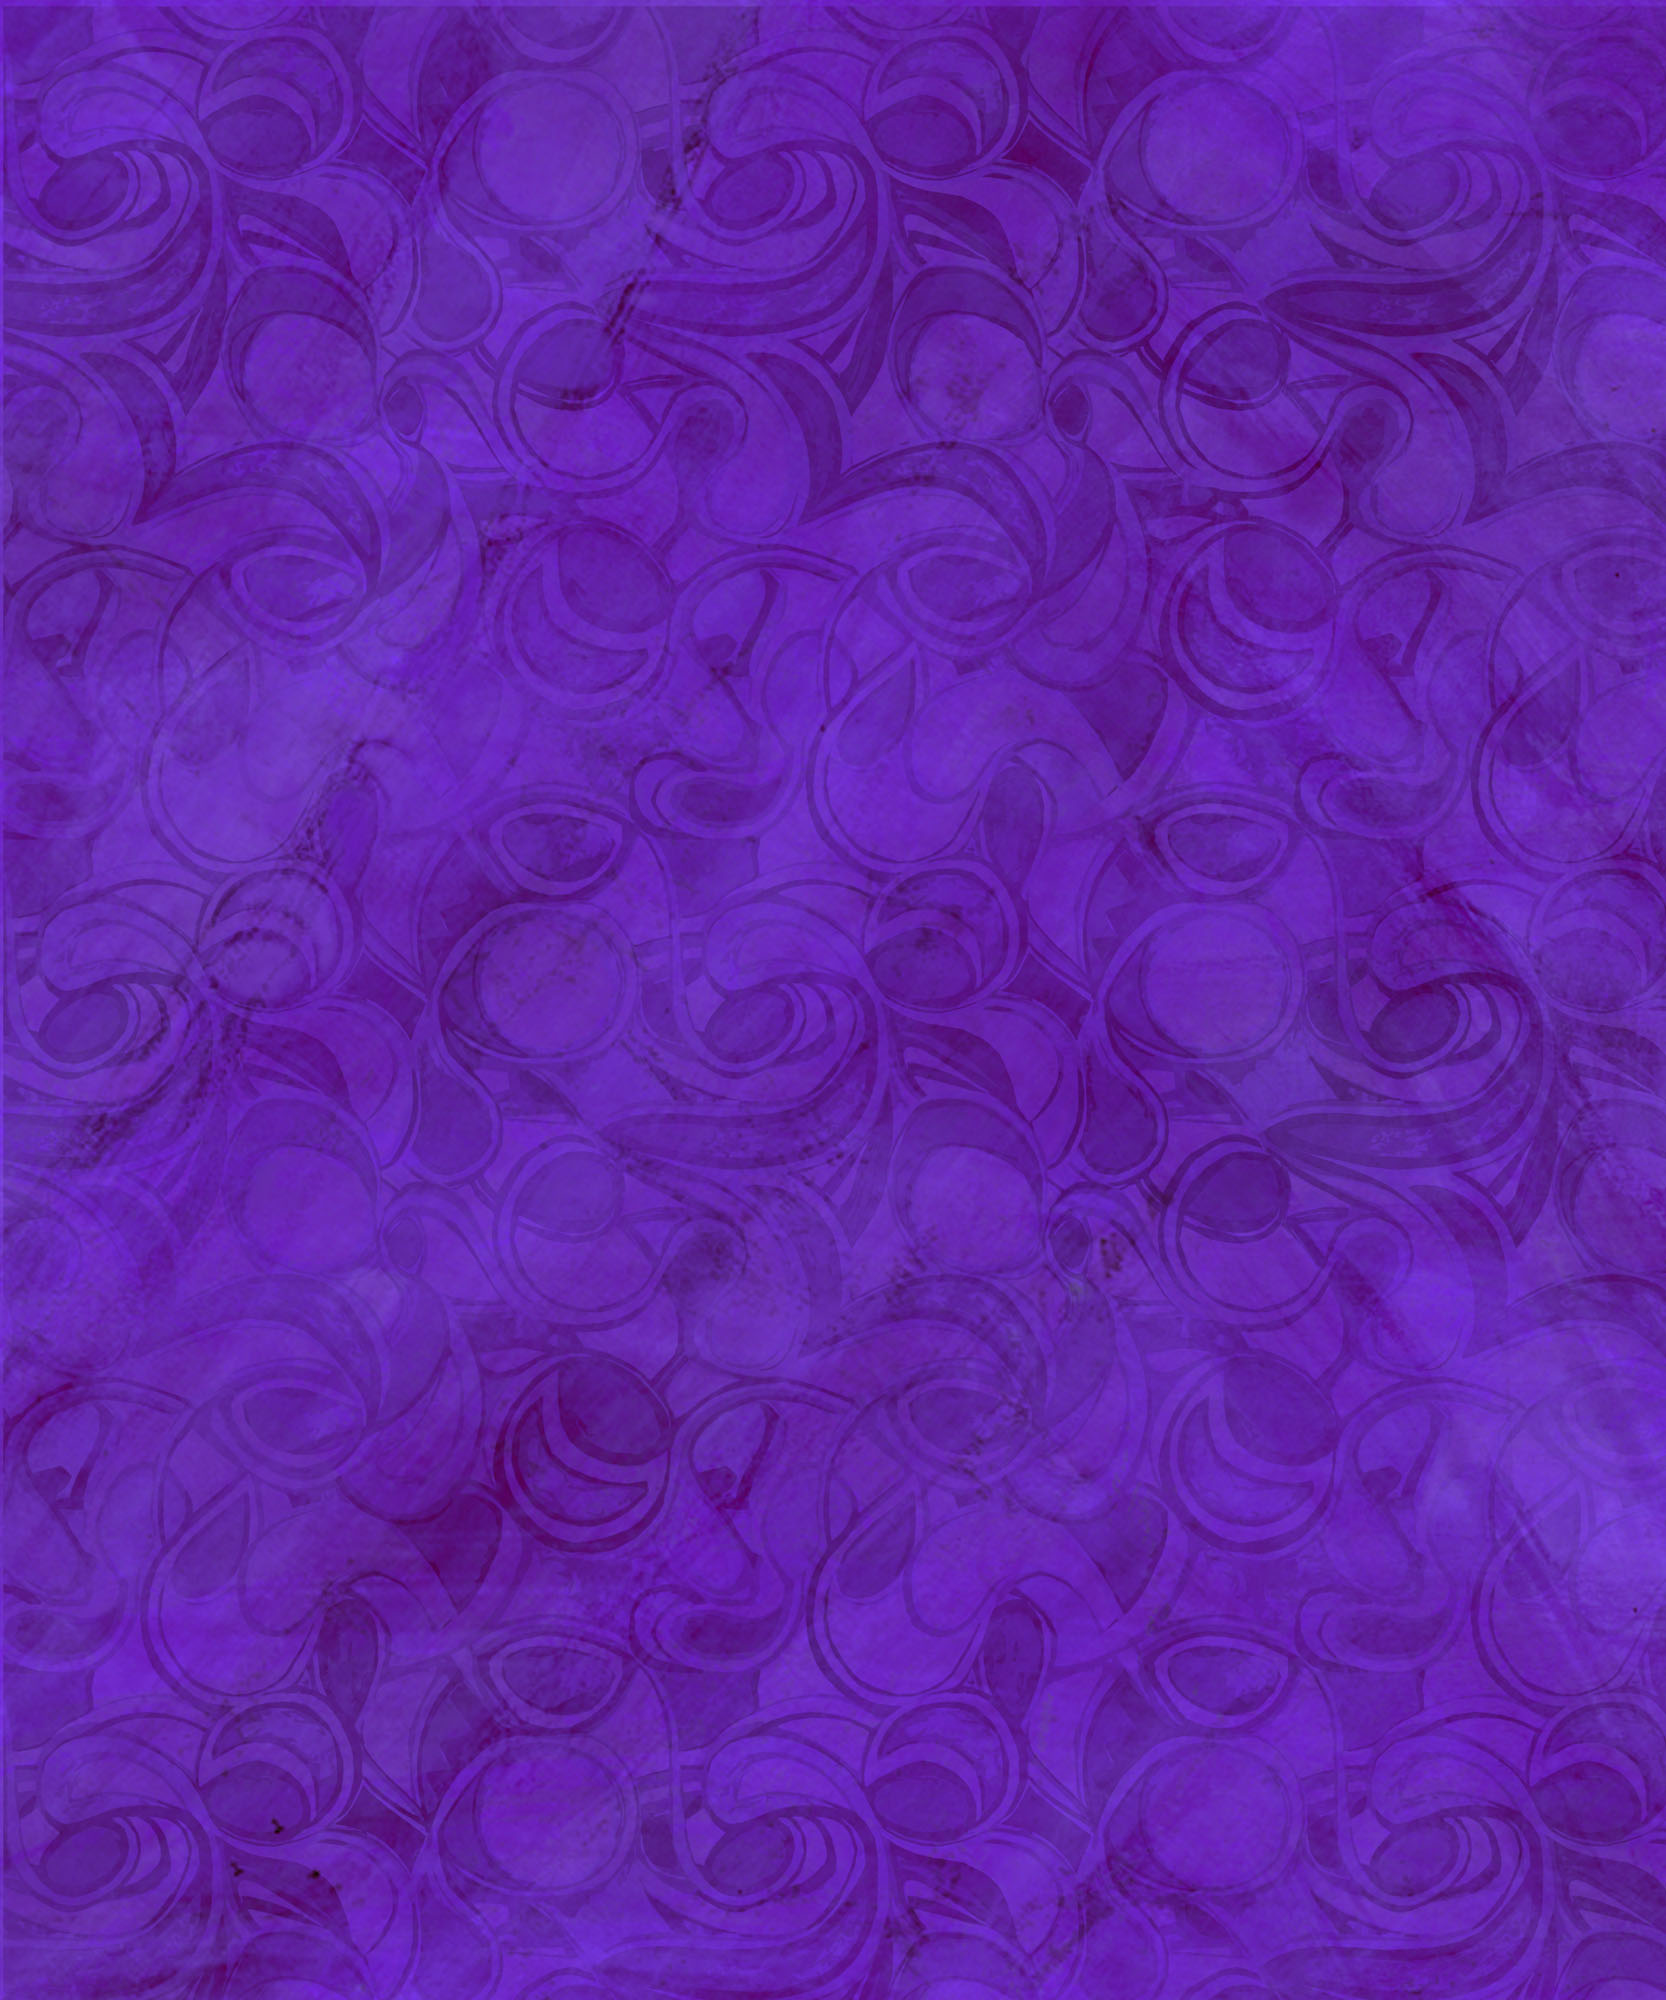 paislymuster lila mit lila hintergrund Kopie.jpg